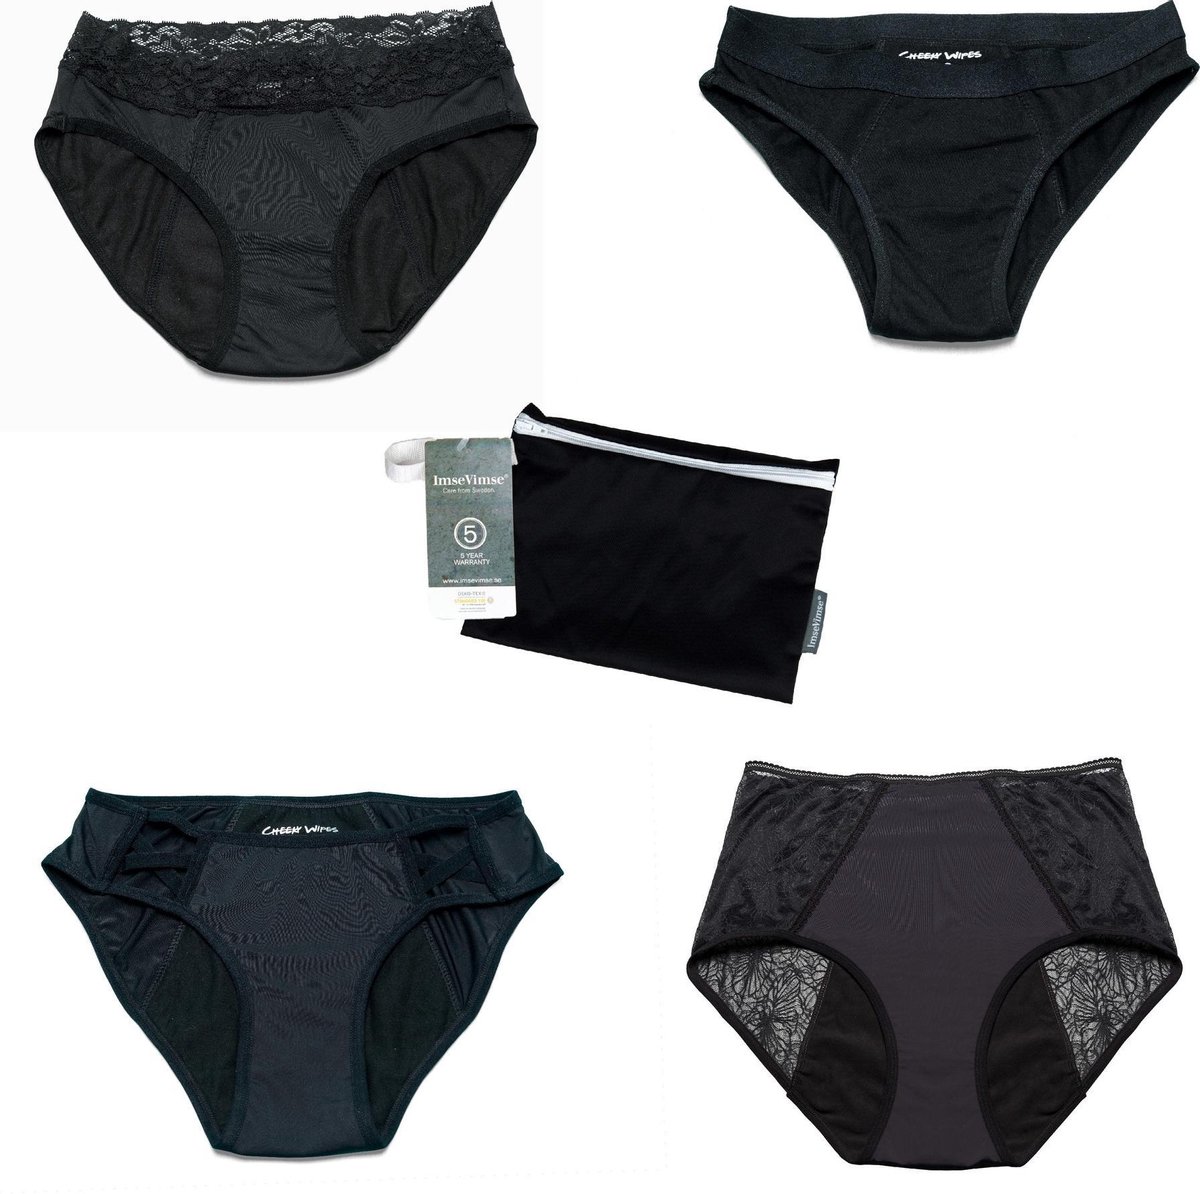 Cheeky Wipes menstruatie ondergoed - Set van 4 - 1 x Pretty 1x Sassy 1 x Sporty 1 x Comfy + wetbag - maat 32 - 34